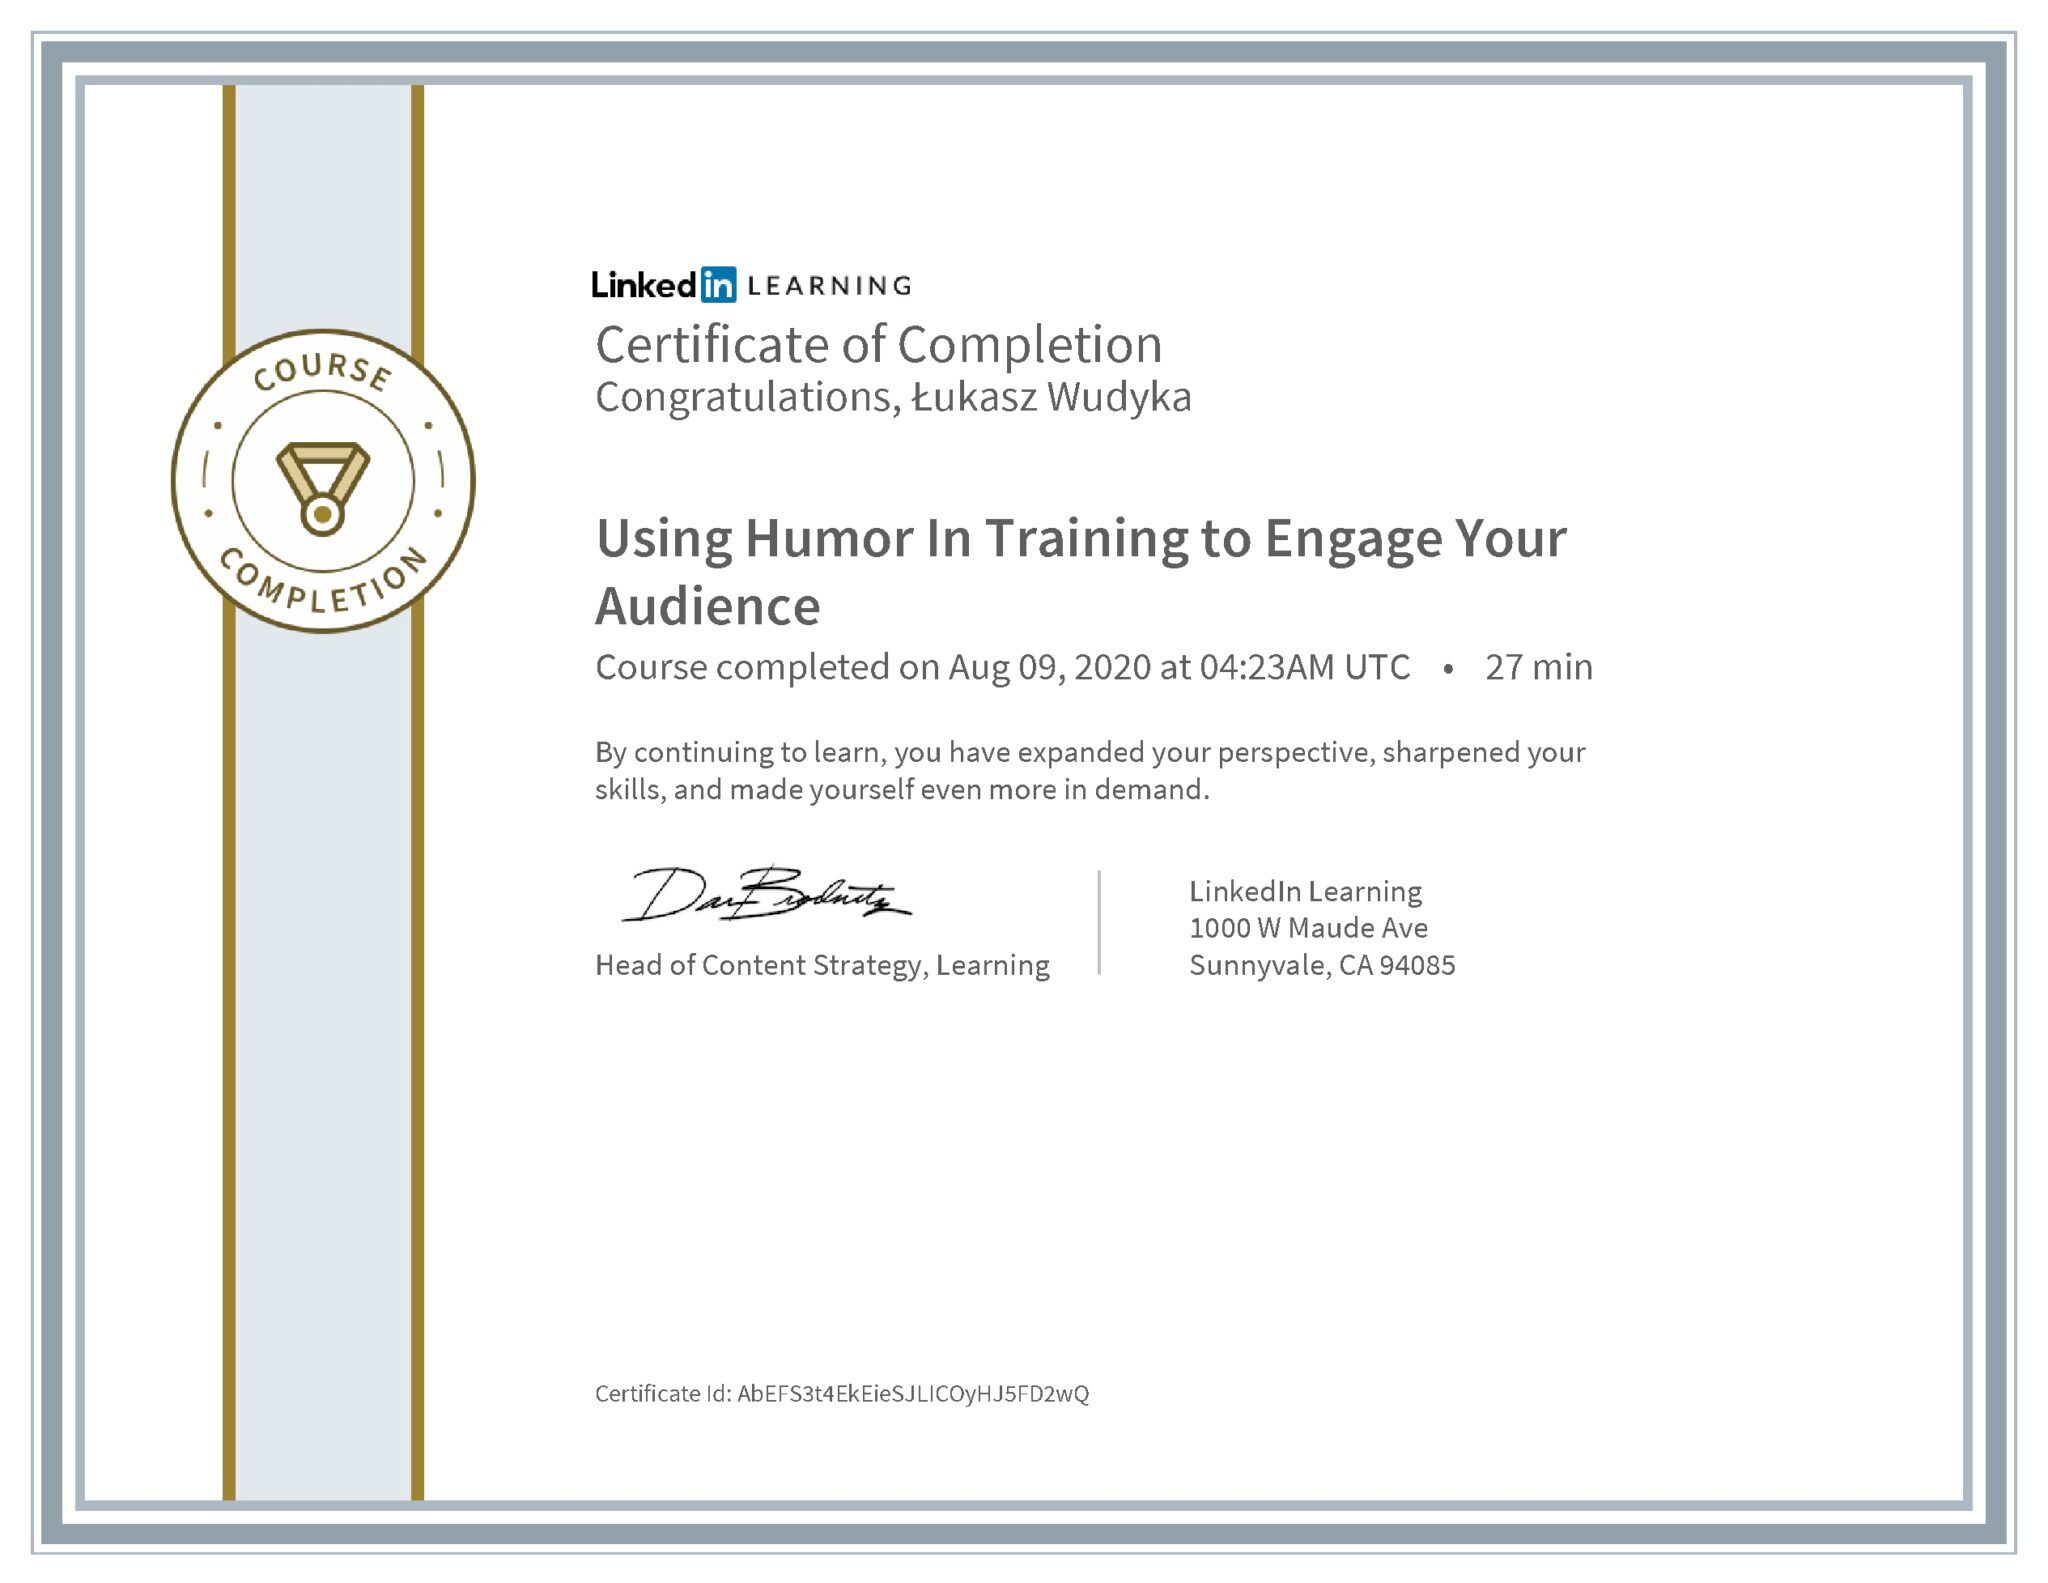 Łukasz Wudyka certyfikat LinkedIn Using Humor In Training to Engage Your Audience